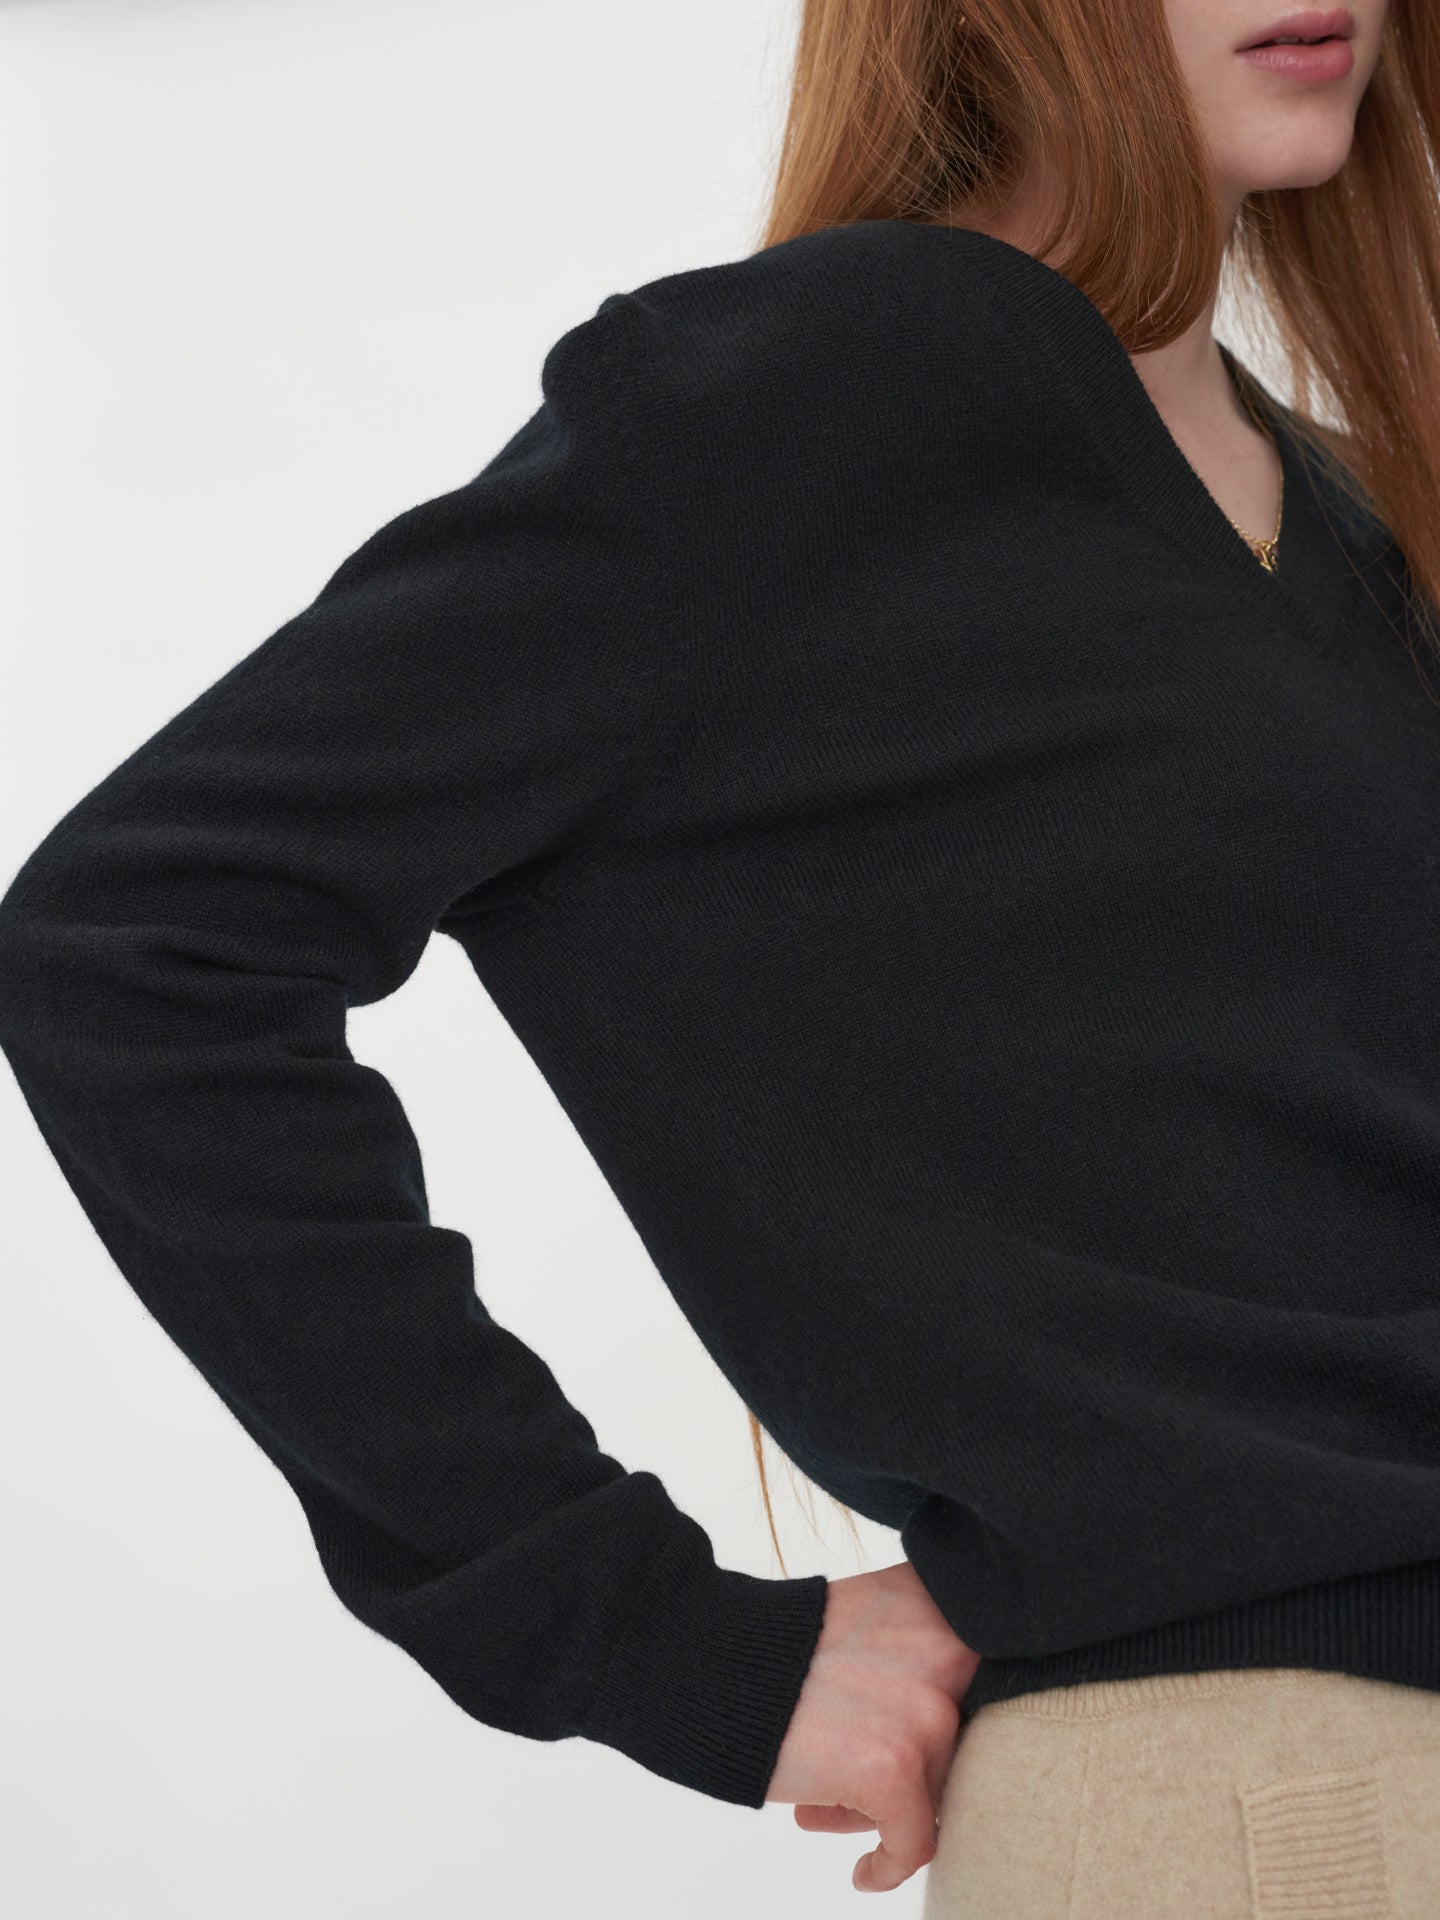 Women's Cashmere Basic V-Neck Sweater Black - Gobi Cashmere